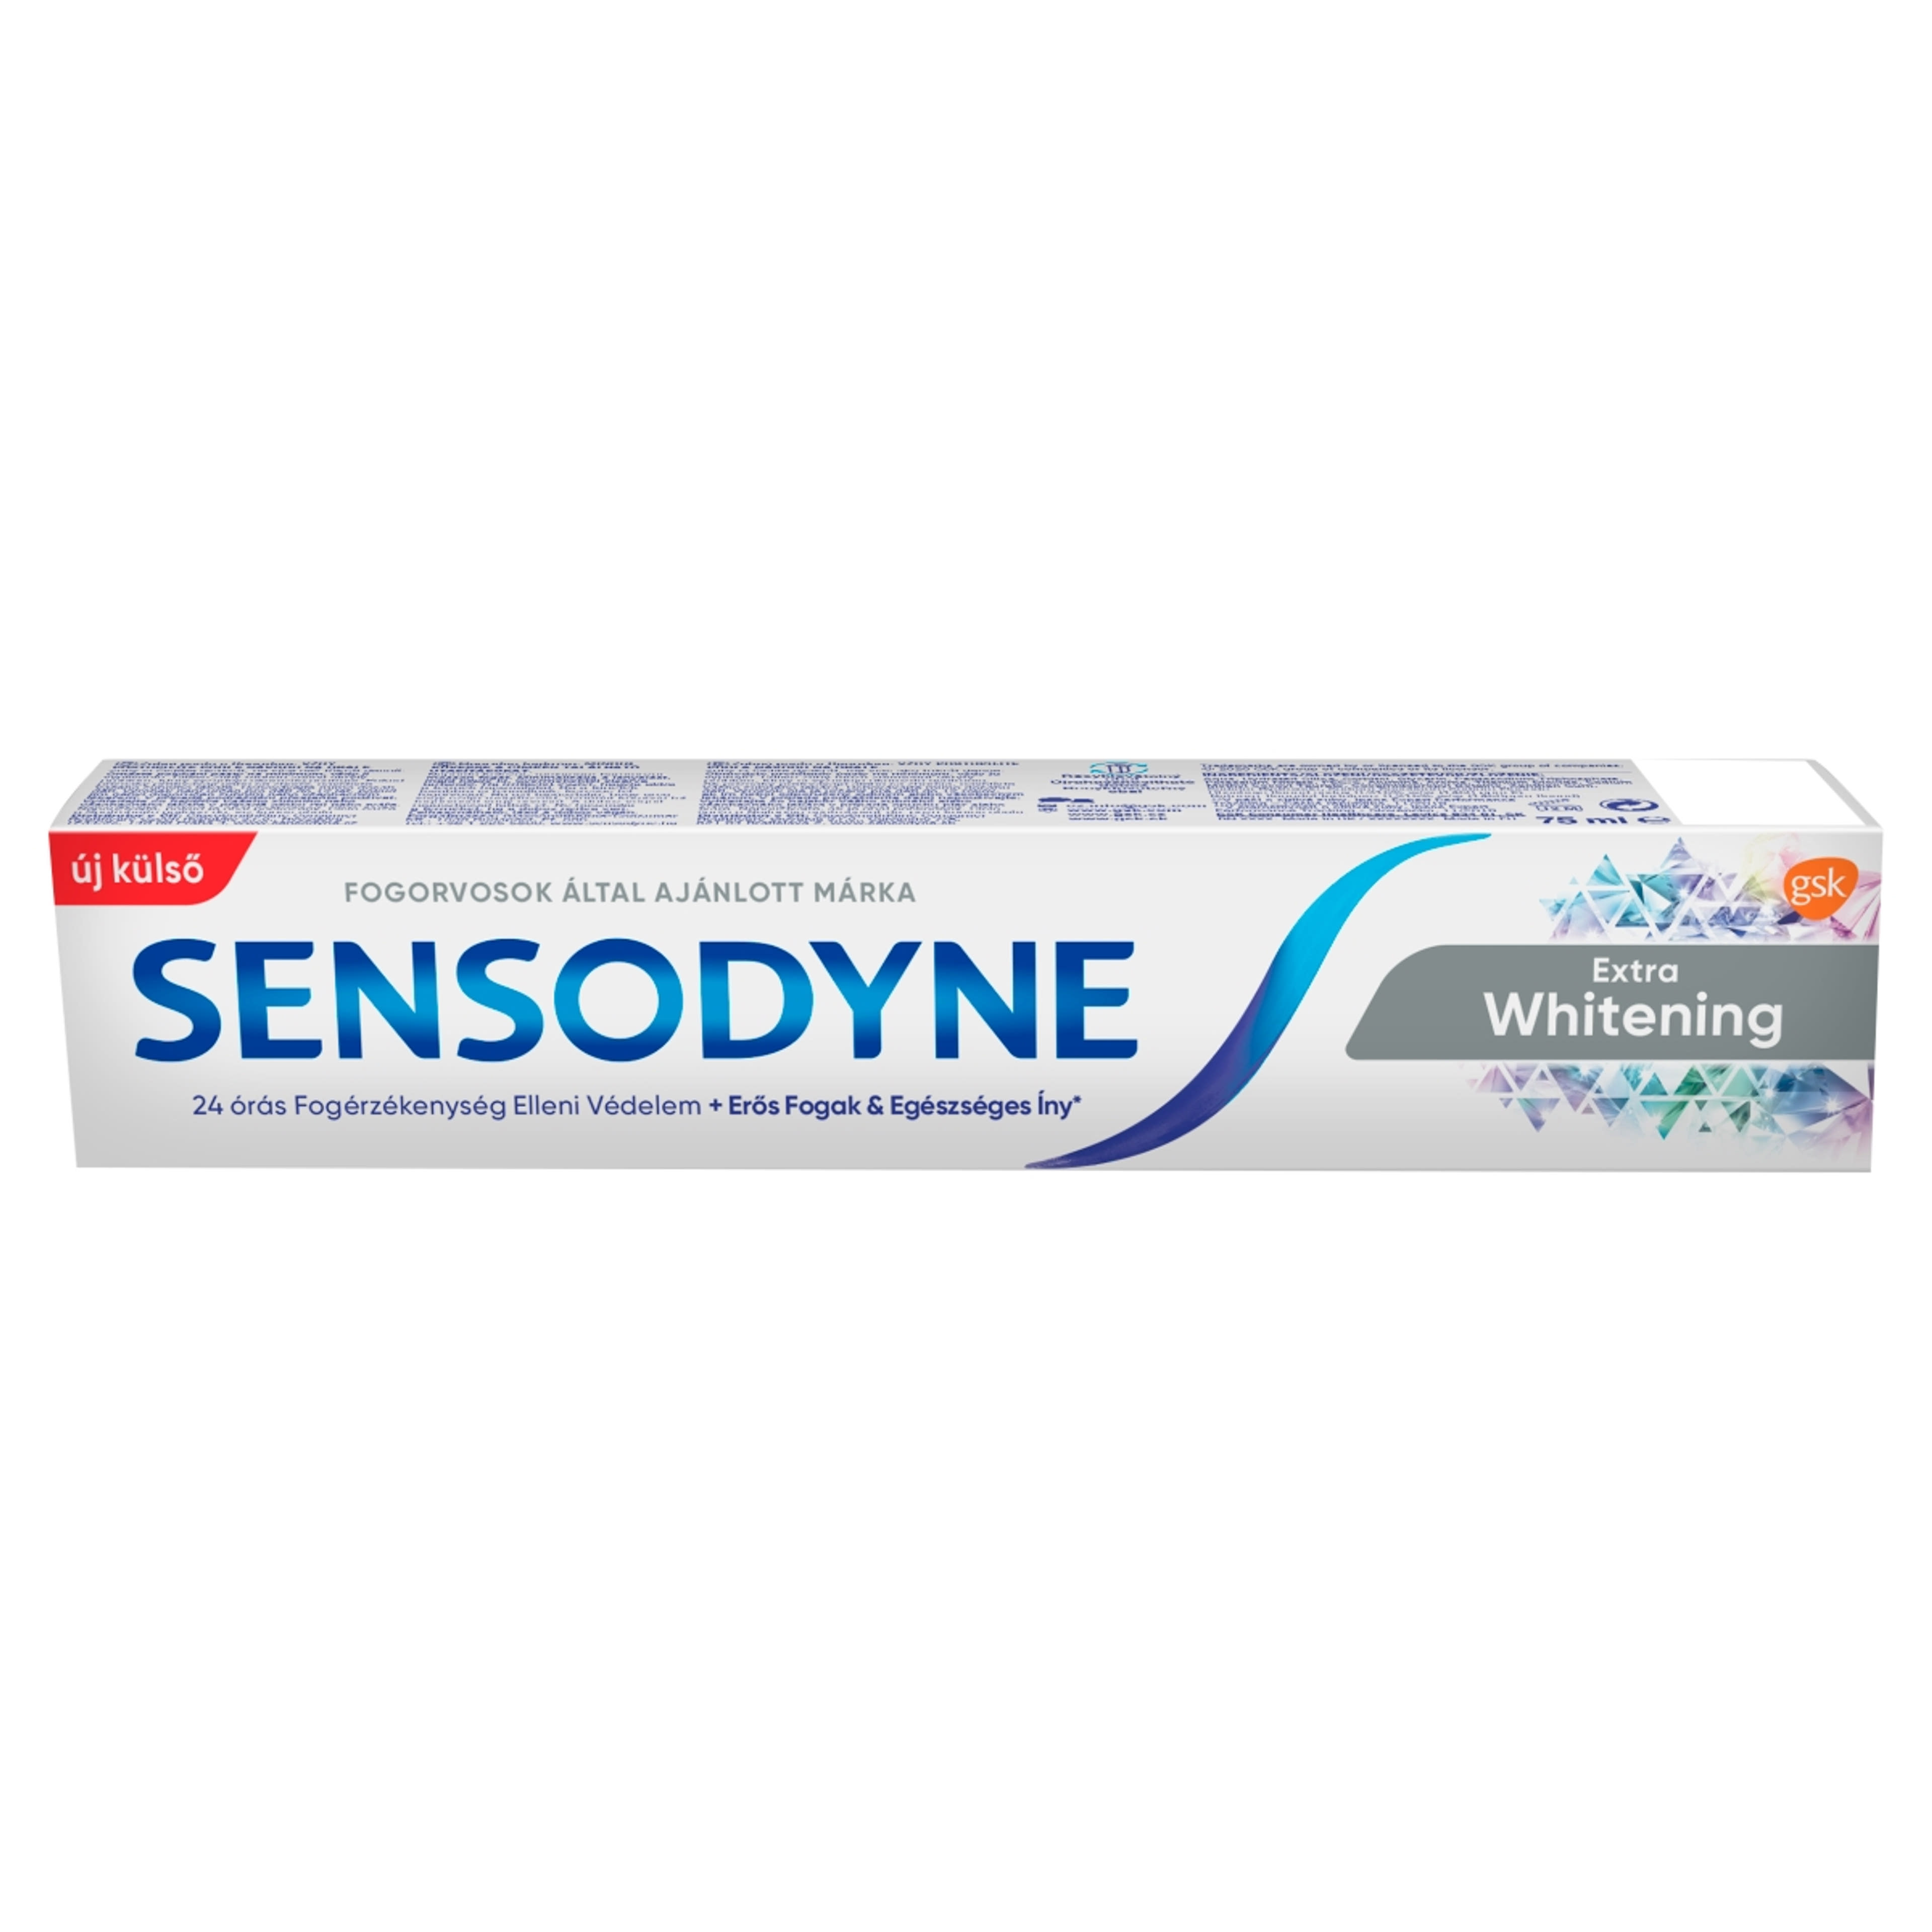 Sensodyne Extra Whitening fogkrém - 75 ml-2